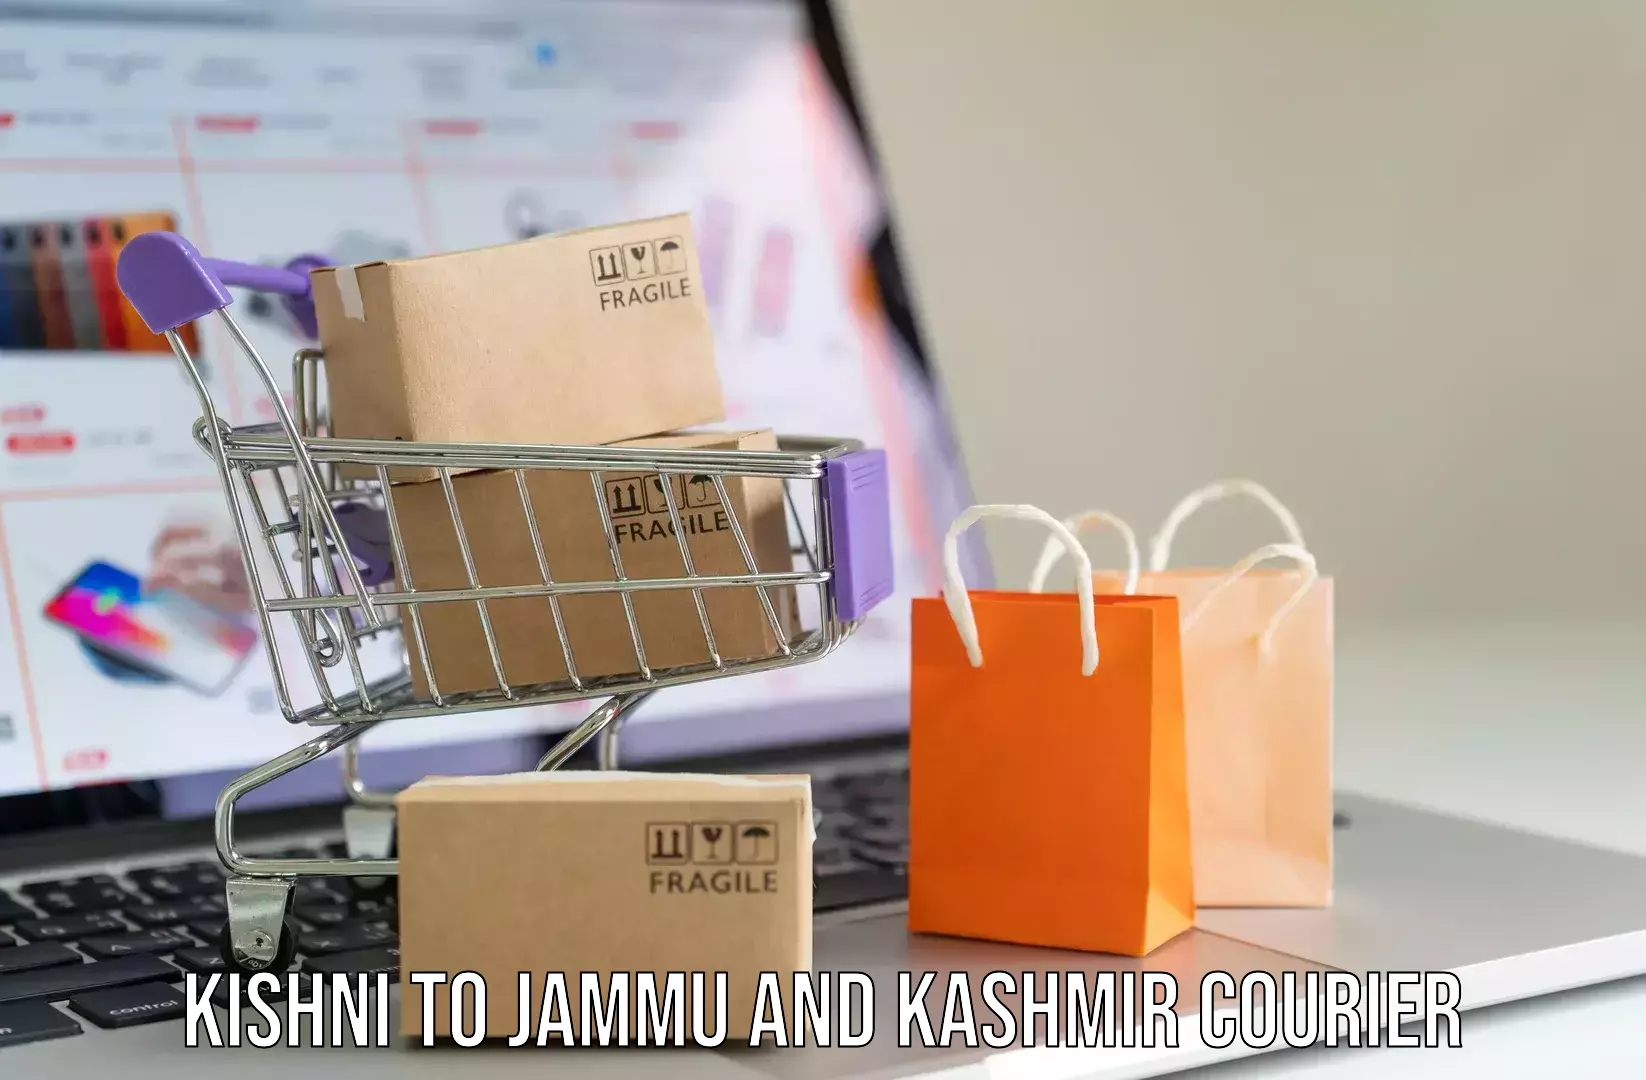 Instant baggage transport quote Kishni to Srinagar Kashmir